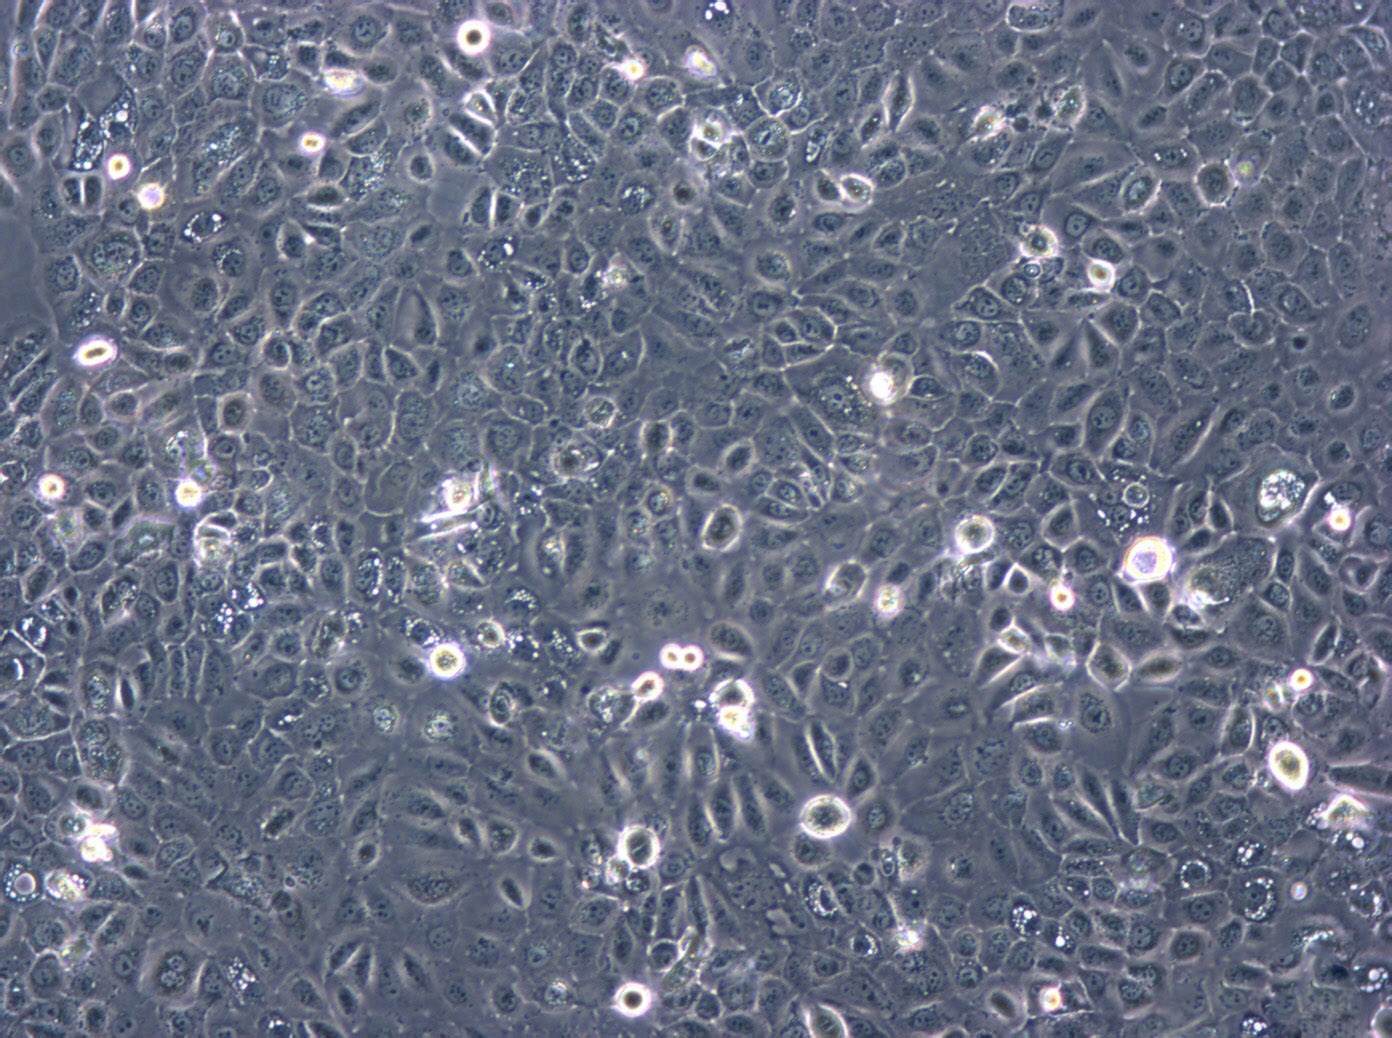 McA-RH7777 epithelioid cells大鼠肝癌细胞系